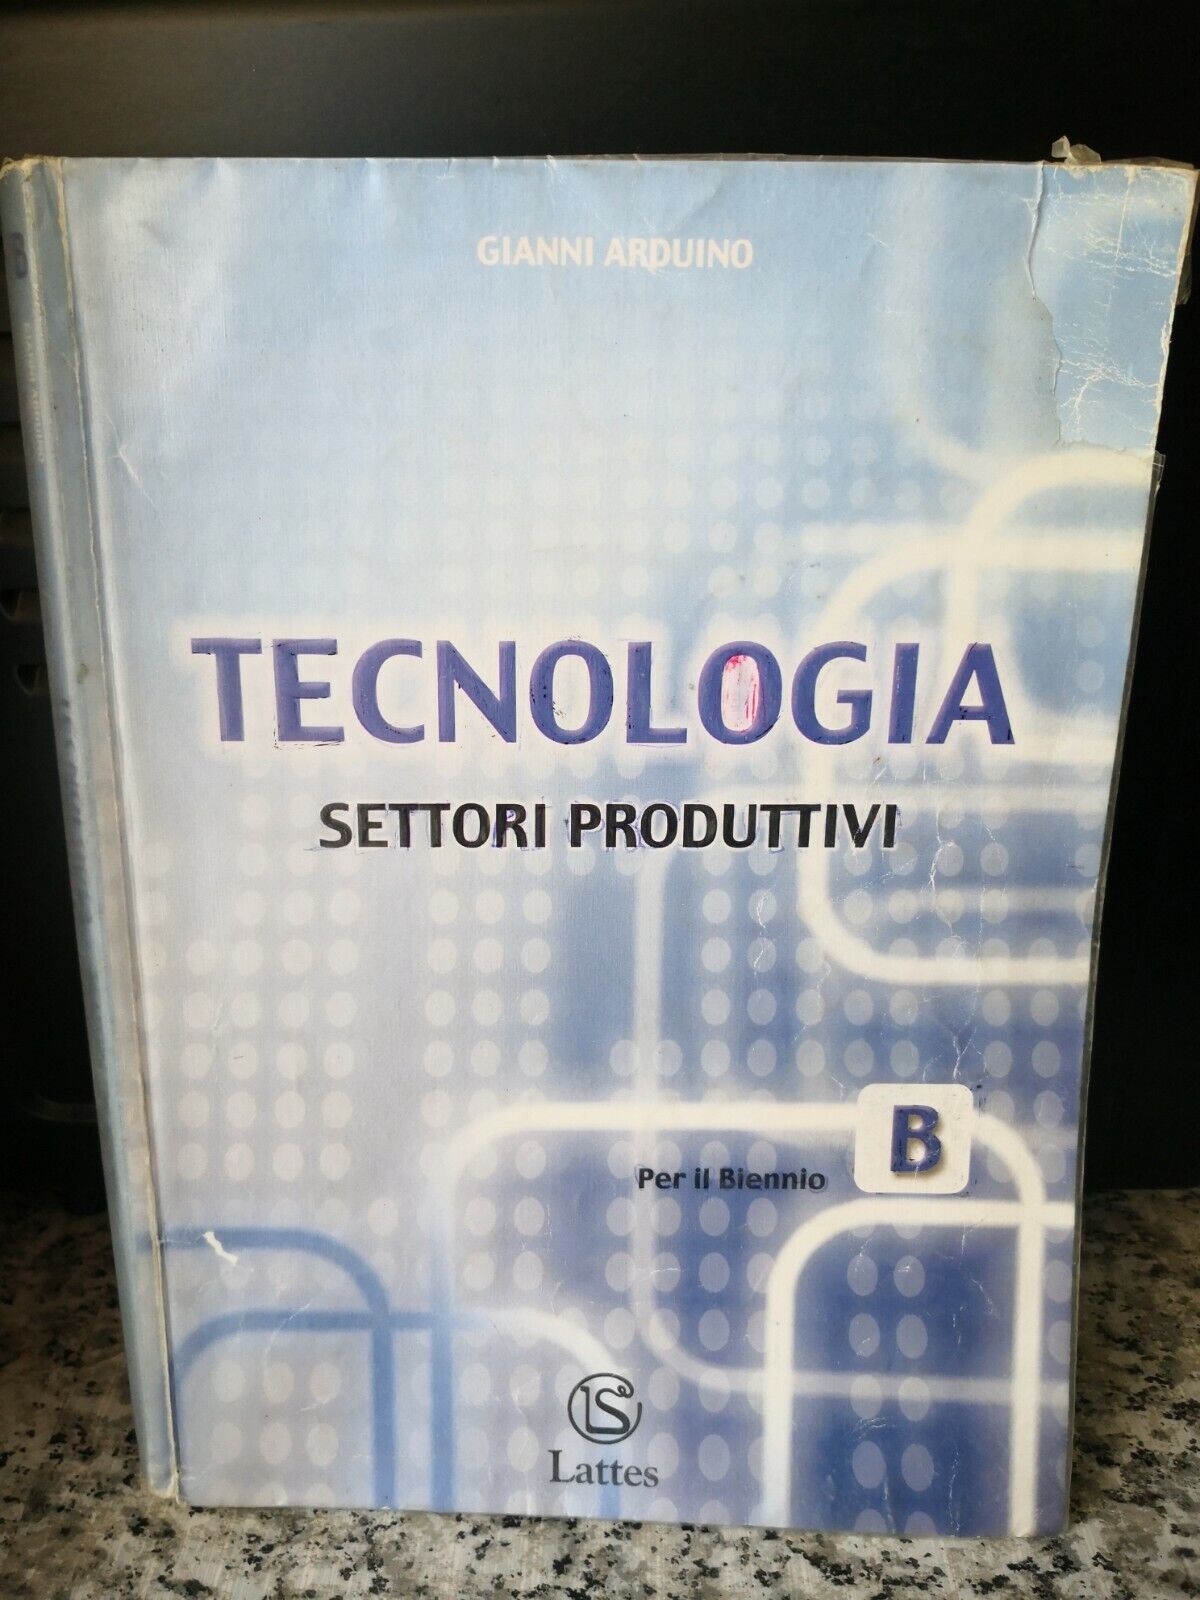  Tecnologia Modulo B settori produttivi  di Gianni Arduino,  2004,  Lattes-F